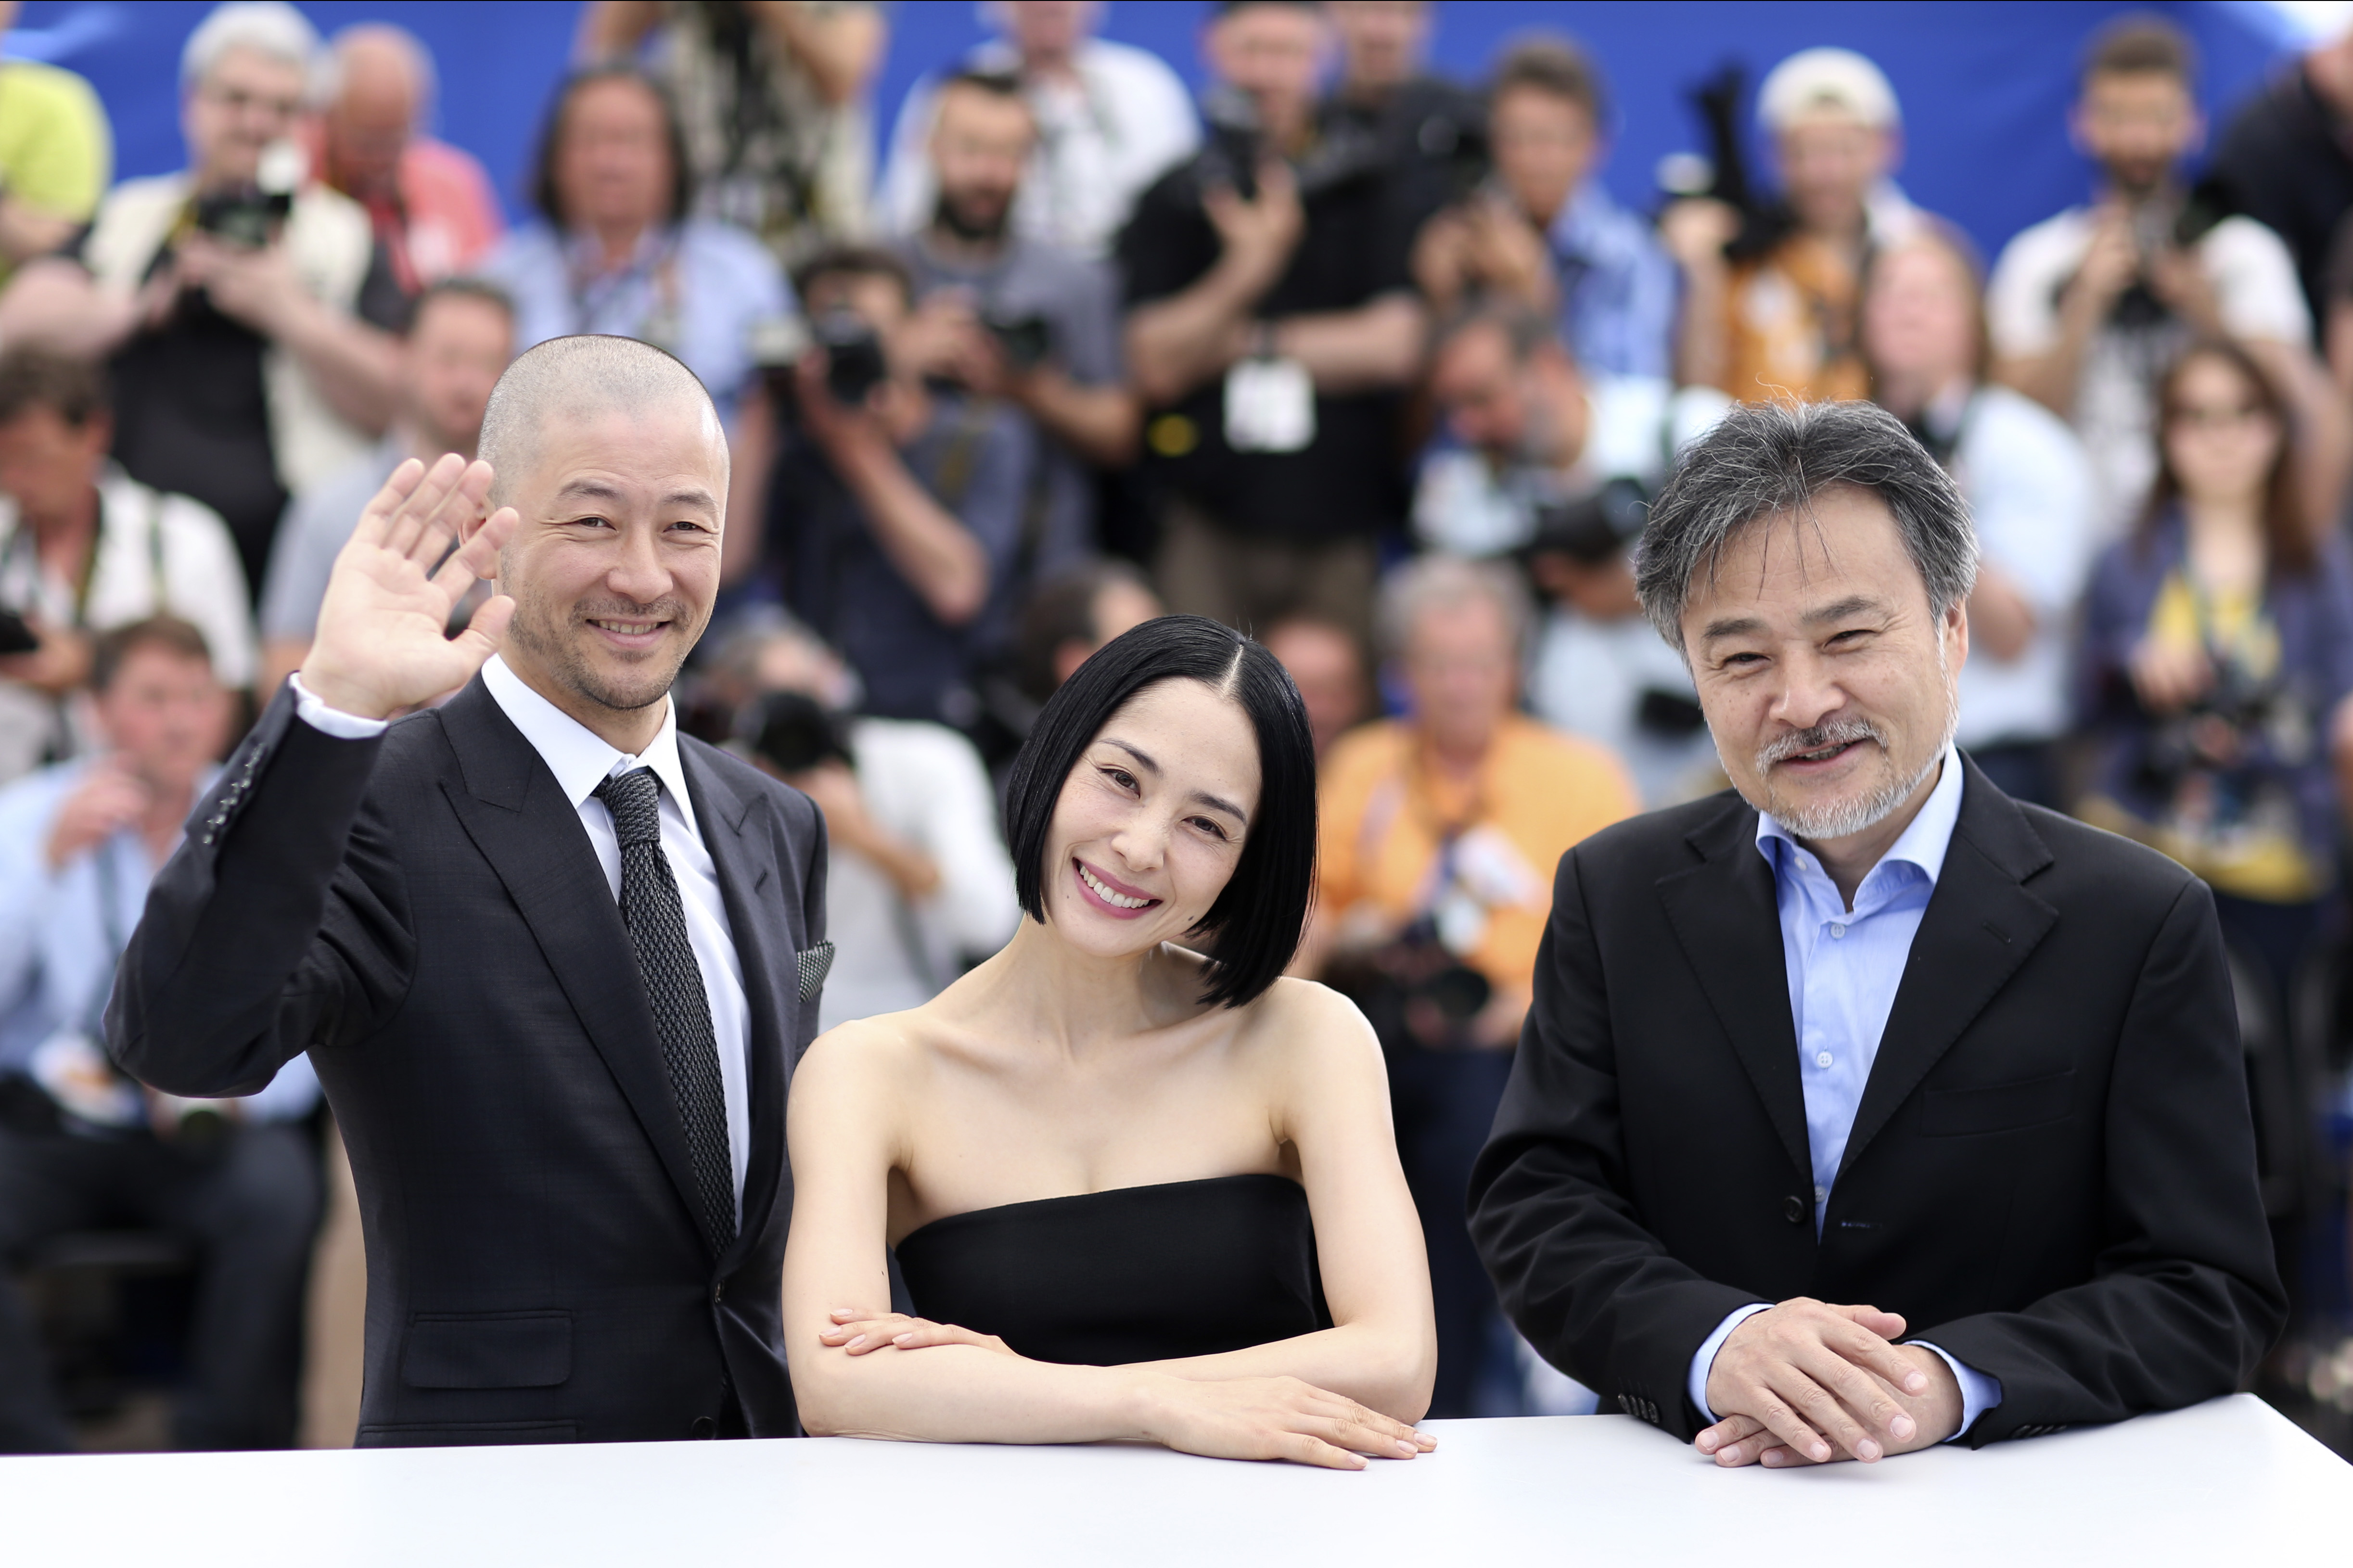 Winning team: Director Kiyoshi Kurosawa poses beside Tadanobu Asano and Eri Fukatsu, the stars of his film 'Kishibe no Tabi' ('Journey to the Shore'), at the 68th Cannes film festival. | AP / THIBAULT CAMUS